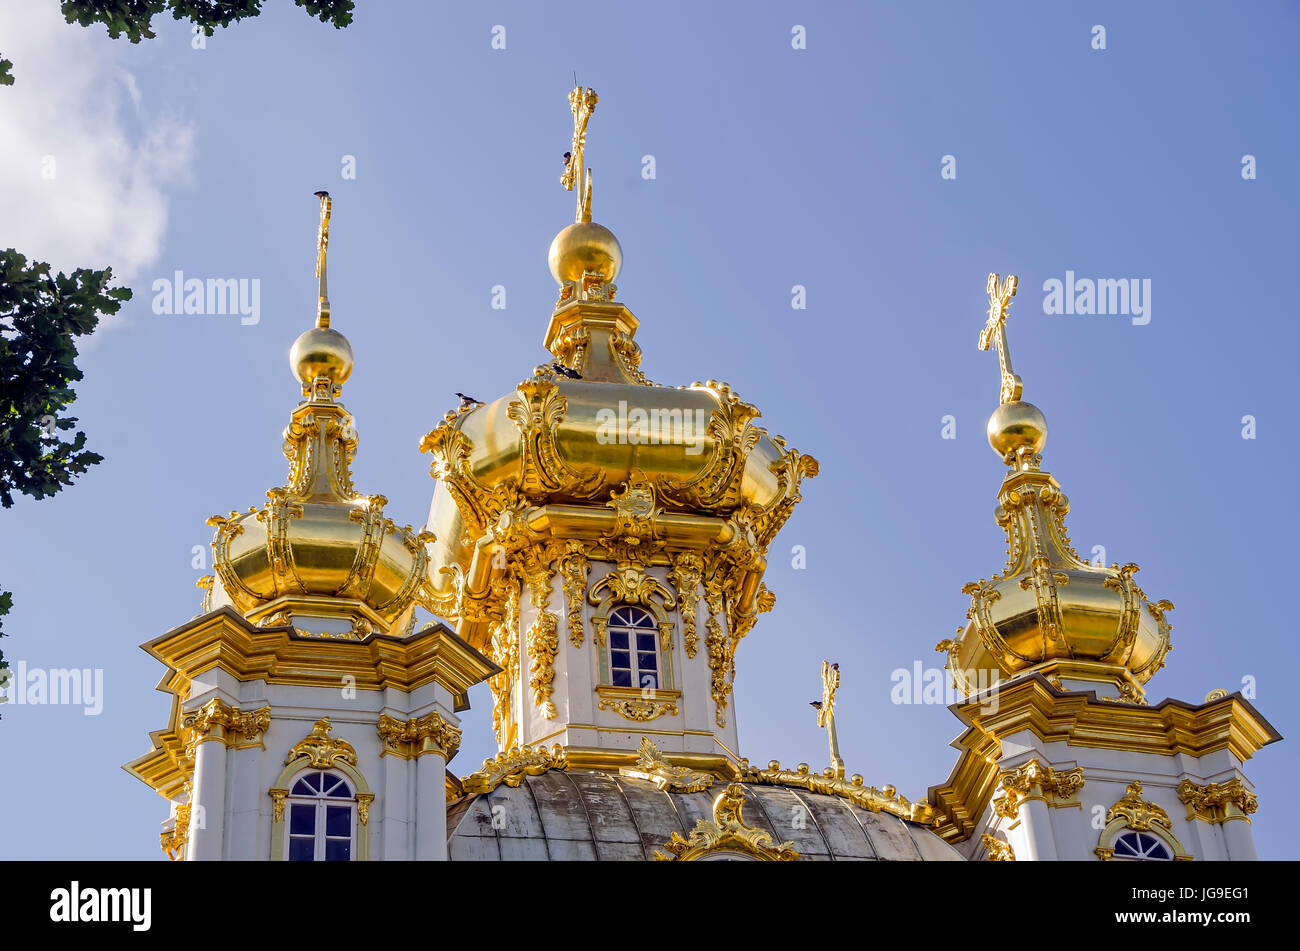 Peterhof Palace cupole dorate di Pietro e Paolo Cattedrale al Grand Palace, nei pressi di San Pietroburgo, Russia Foto Stock